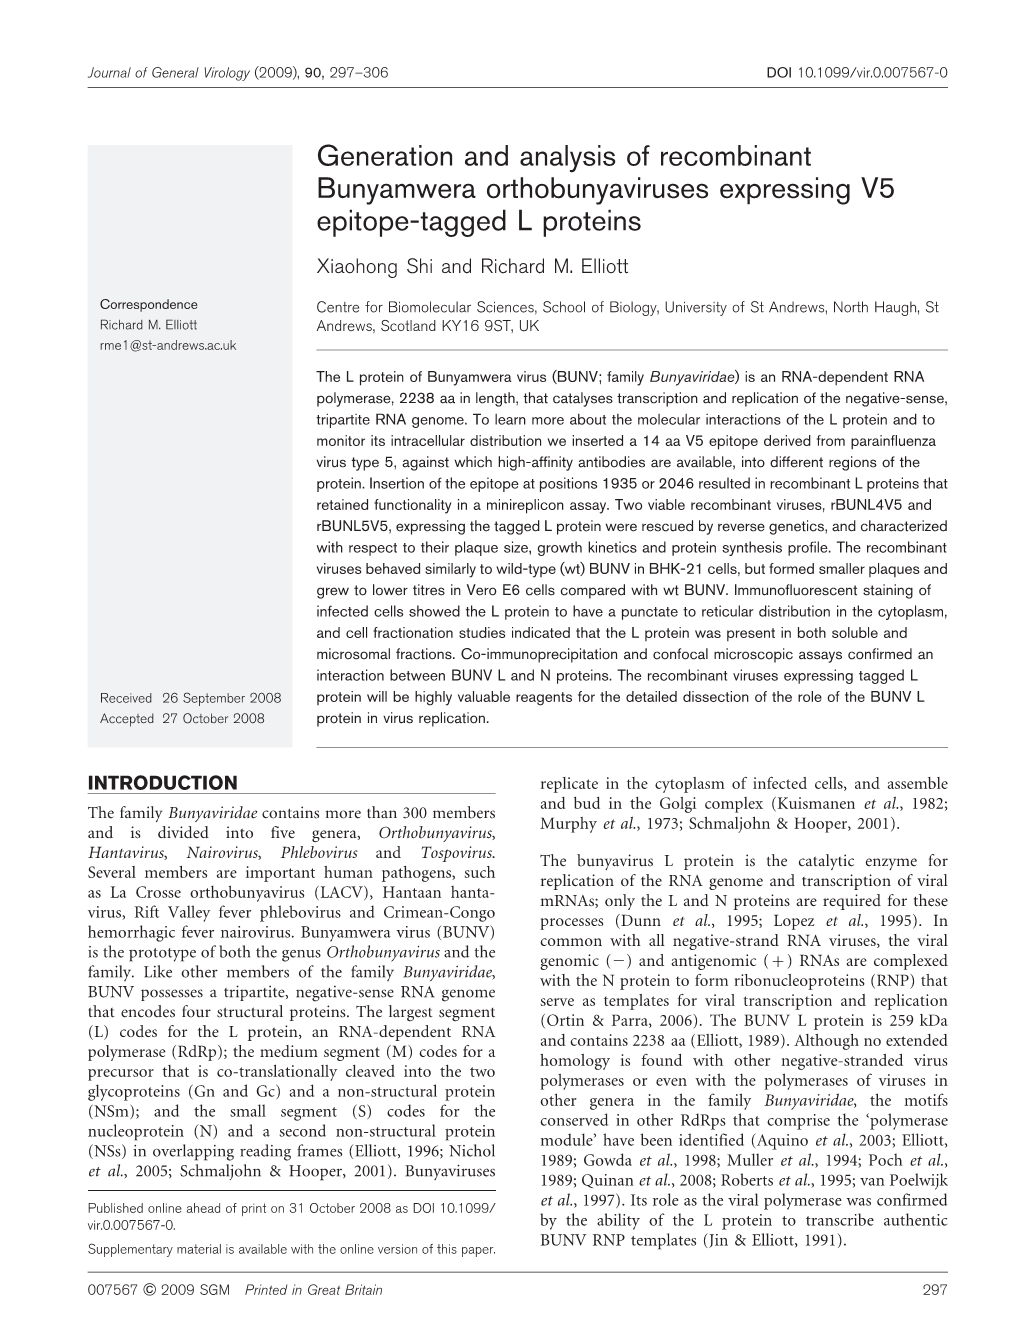 Generation and Analysis of Recombinant Bunyamwera Orthobunyaviruses Expressing V5 Epitope-Tagged L Proteins